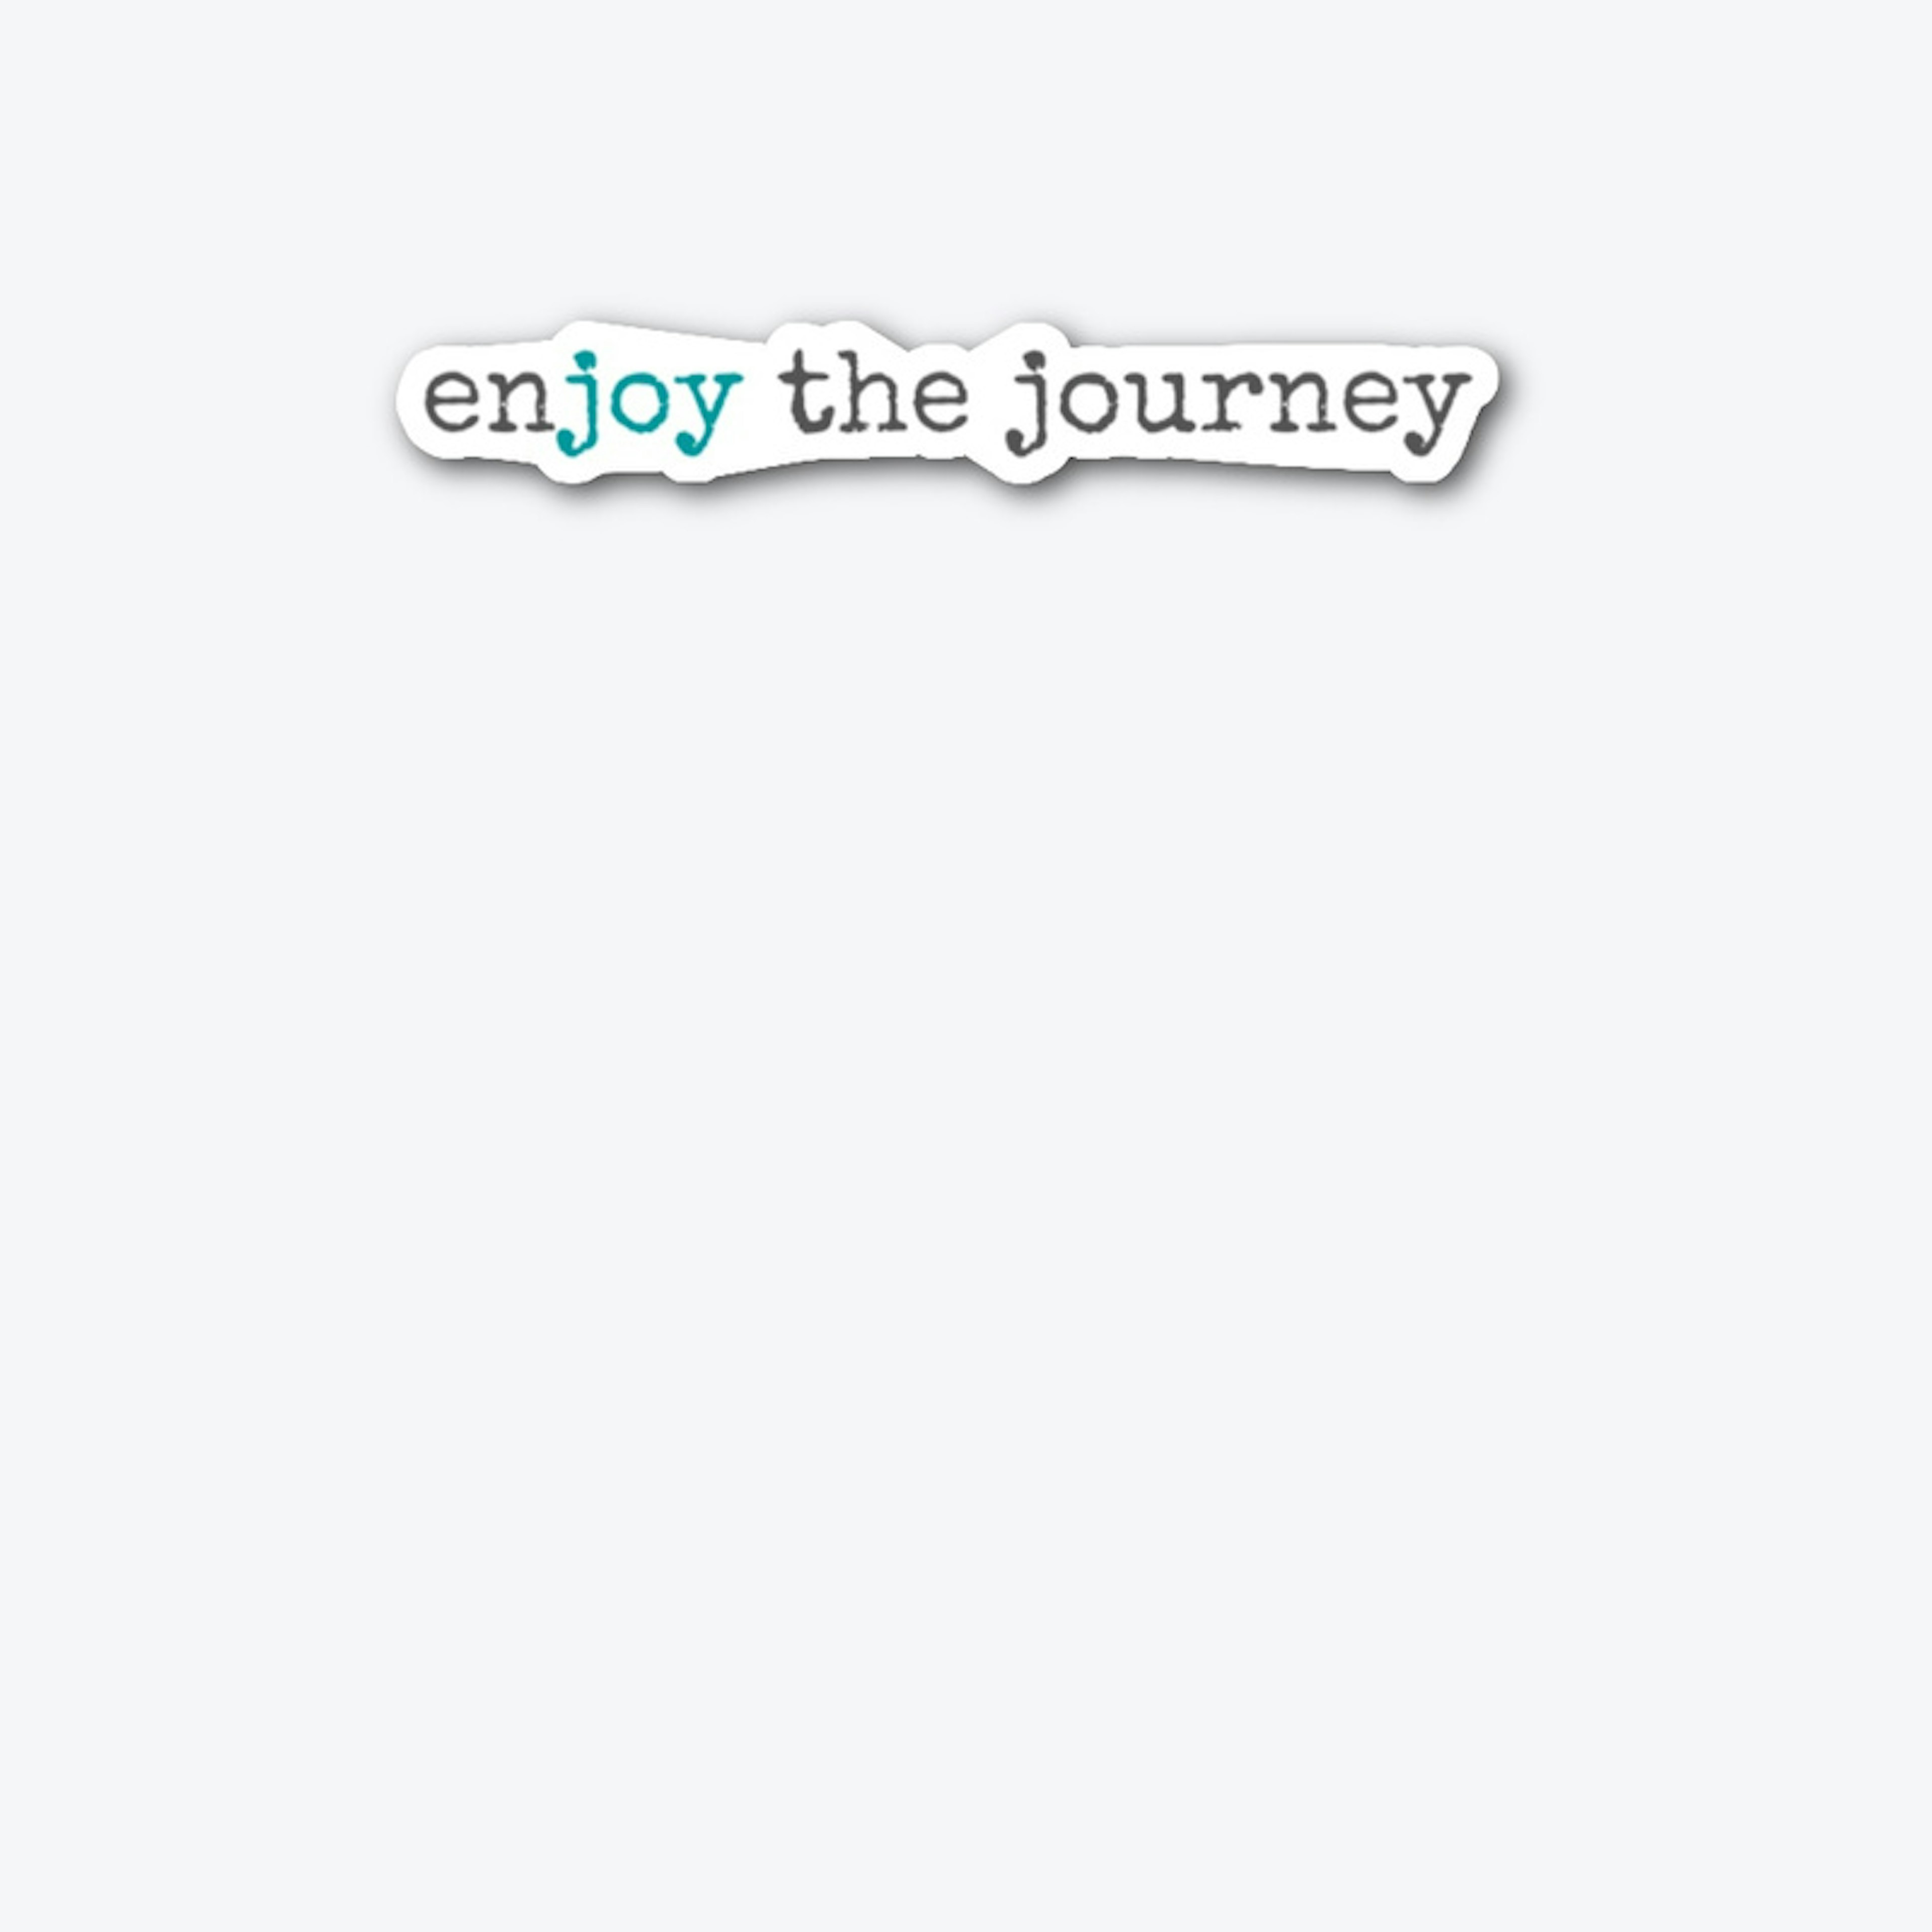 enJOY the journey 